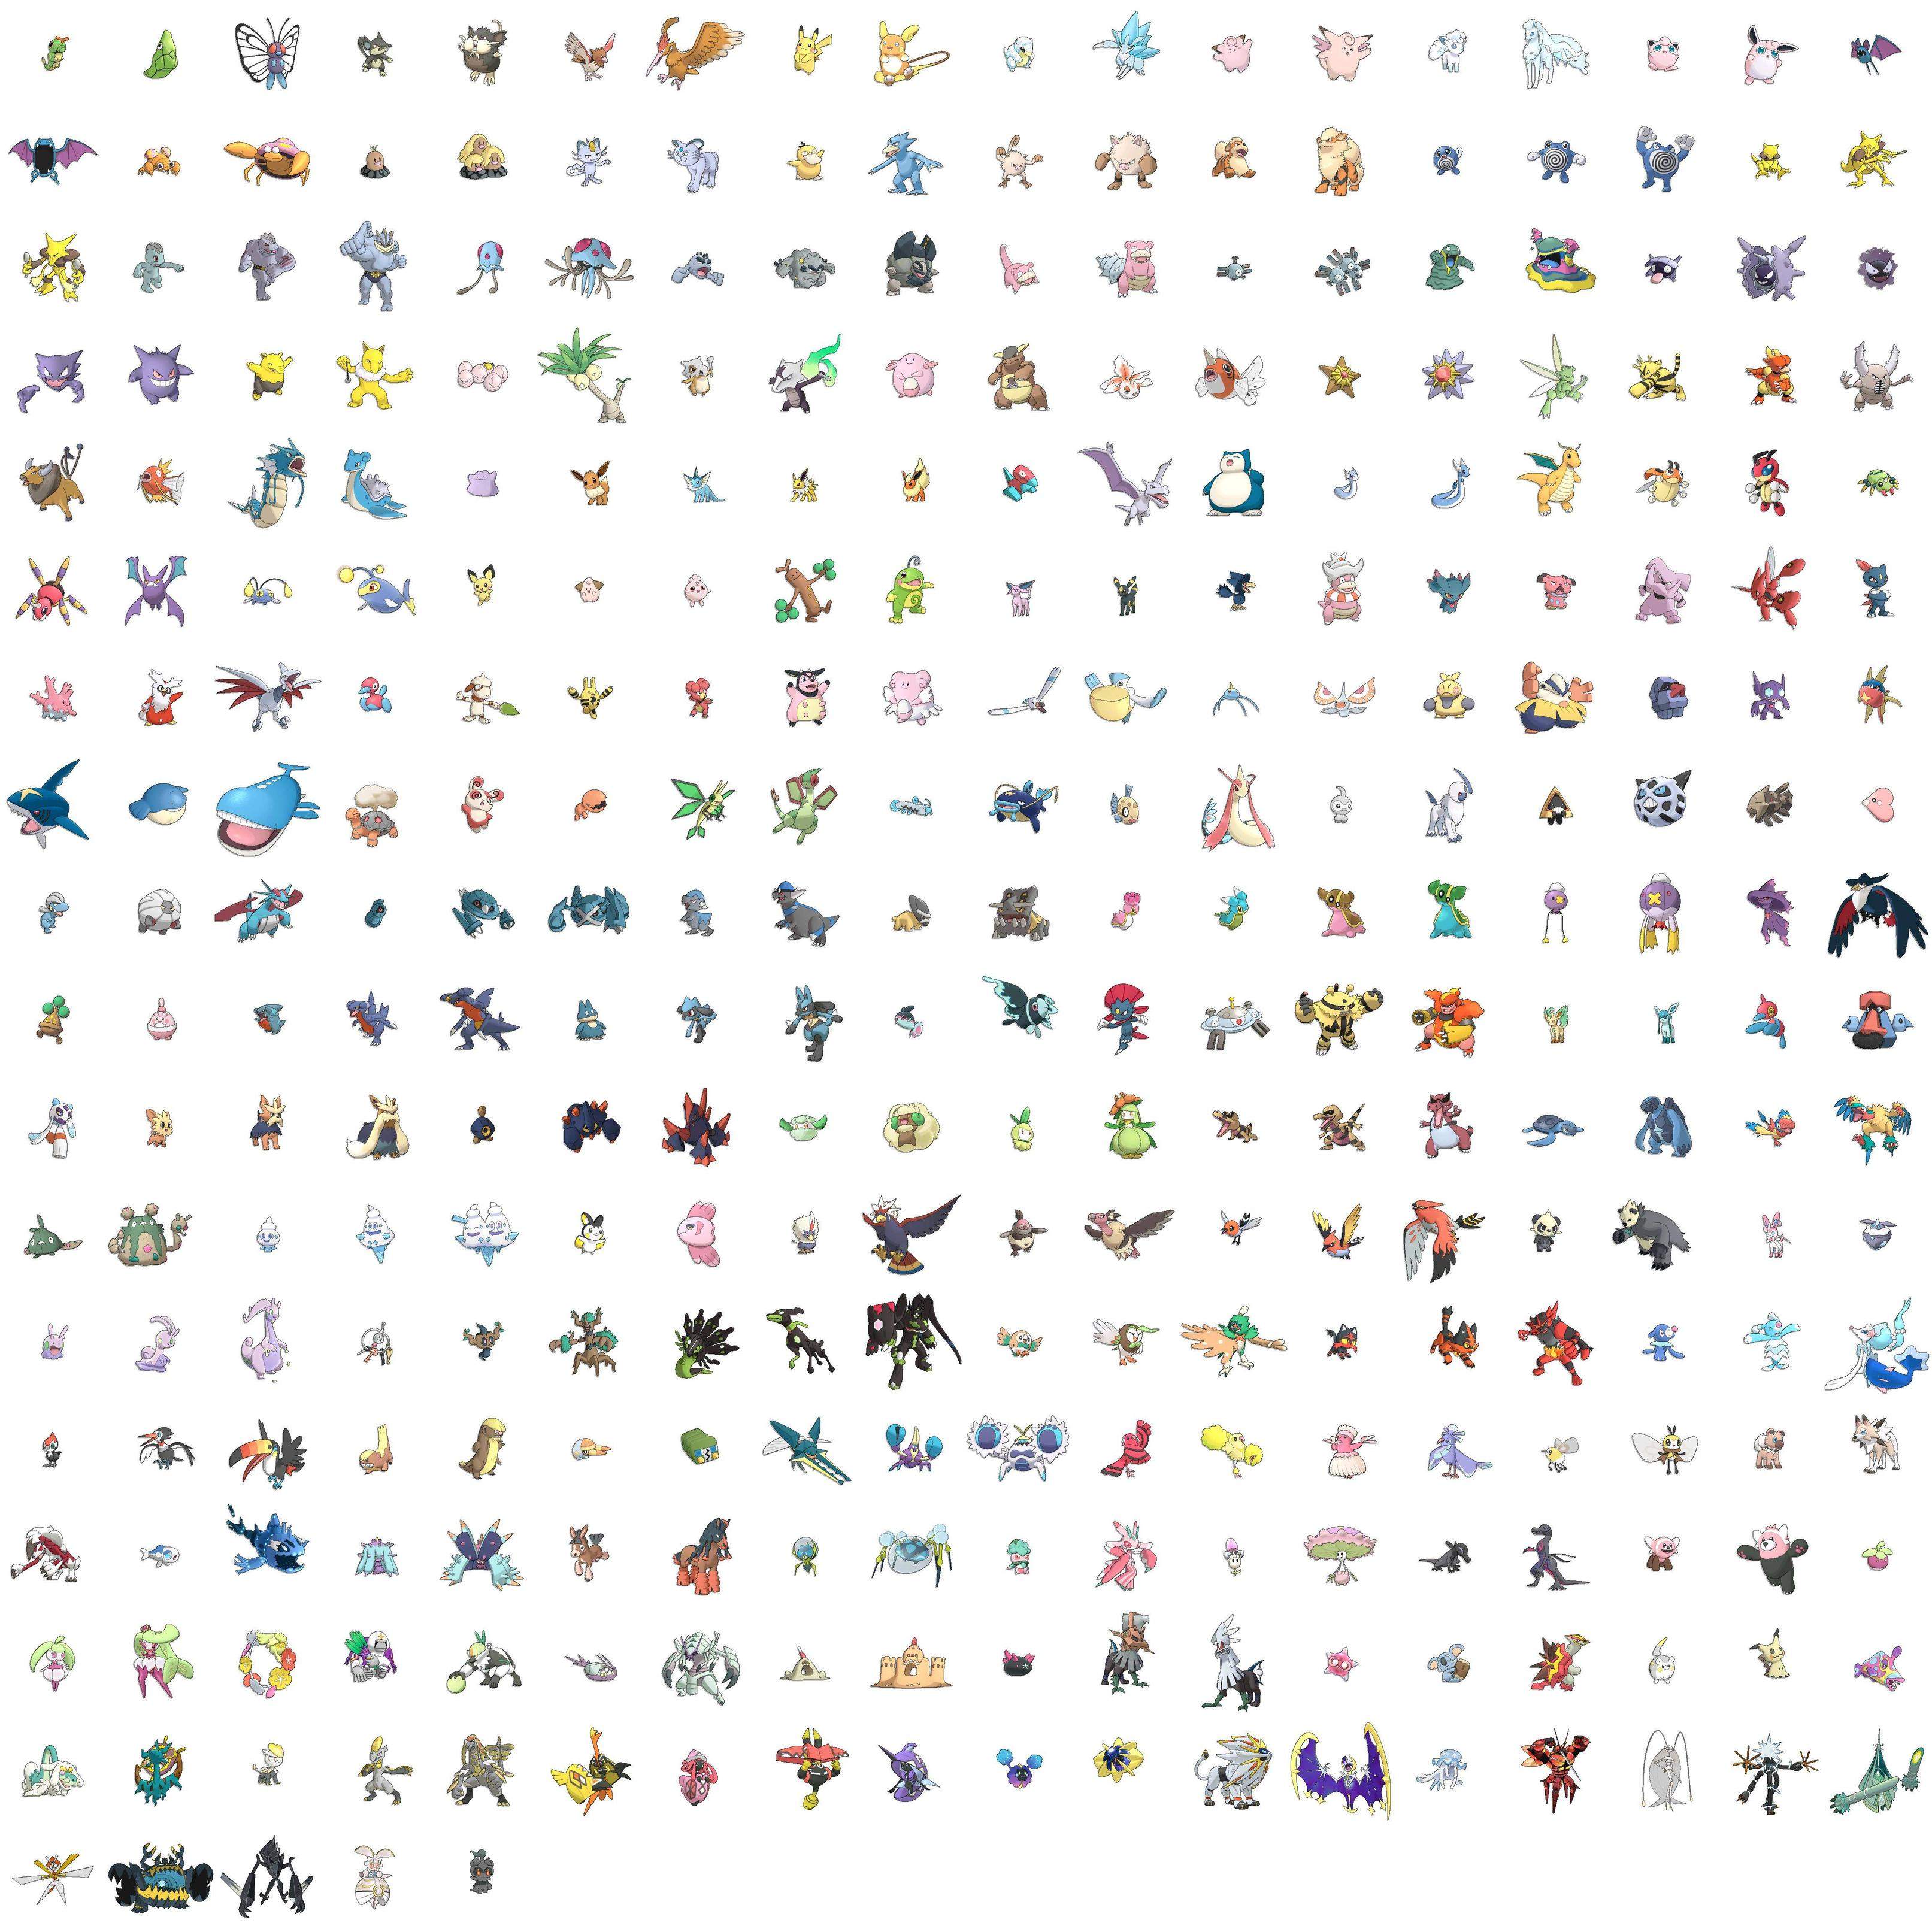 Pokemon Sun and Moon Pokedex round-up: names, descriptions, leaks